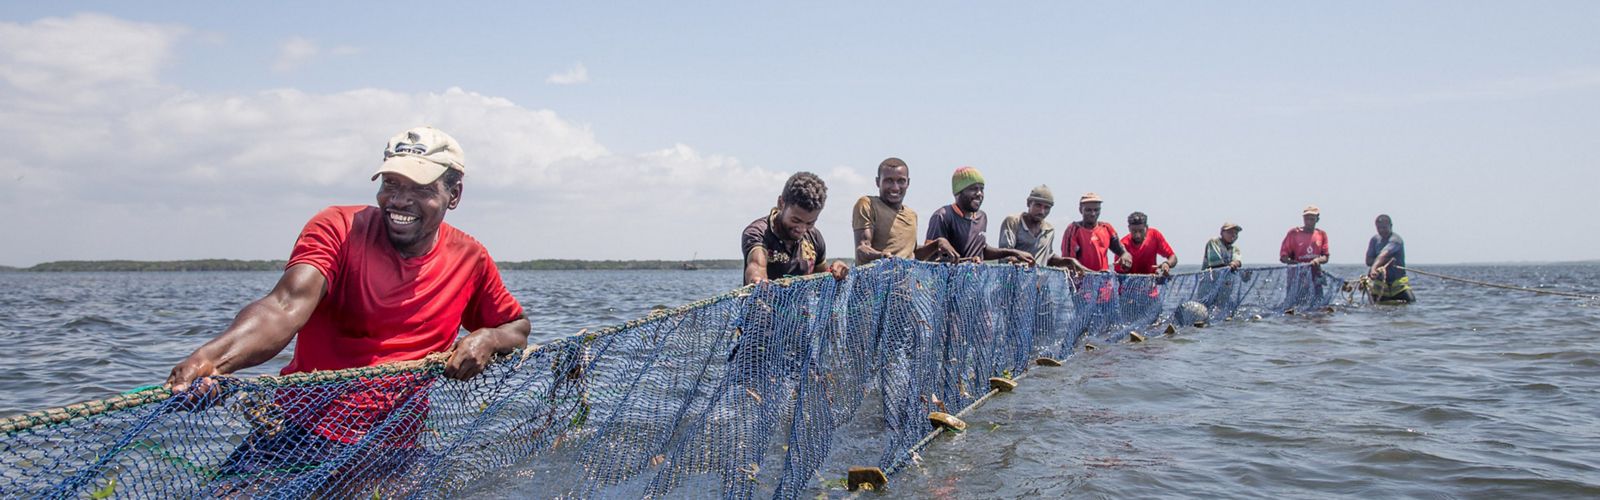 Fishermen from Pate Island in Lamu County pull a beach seine net in the Indian Ocean waters.